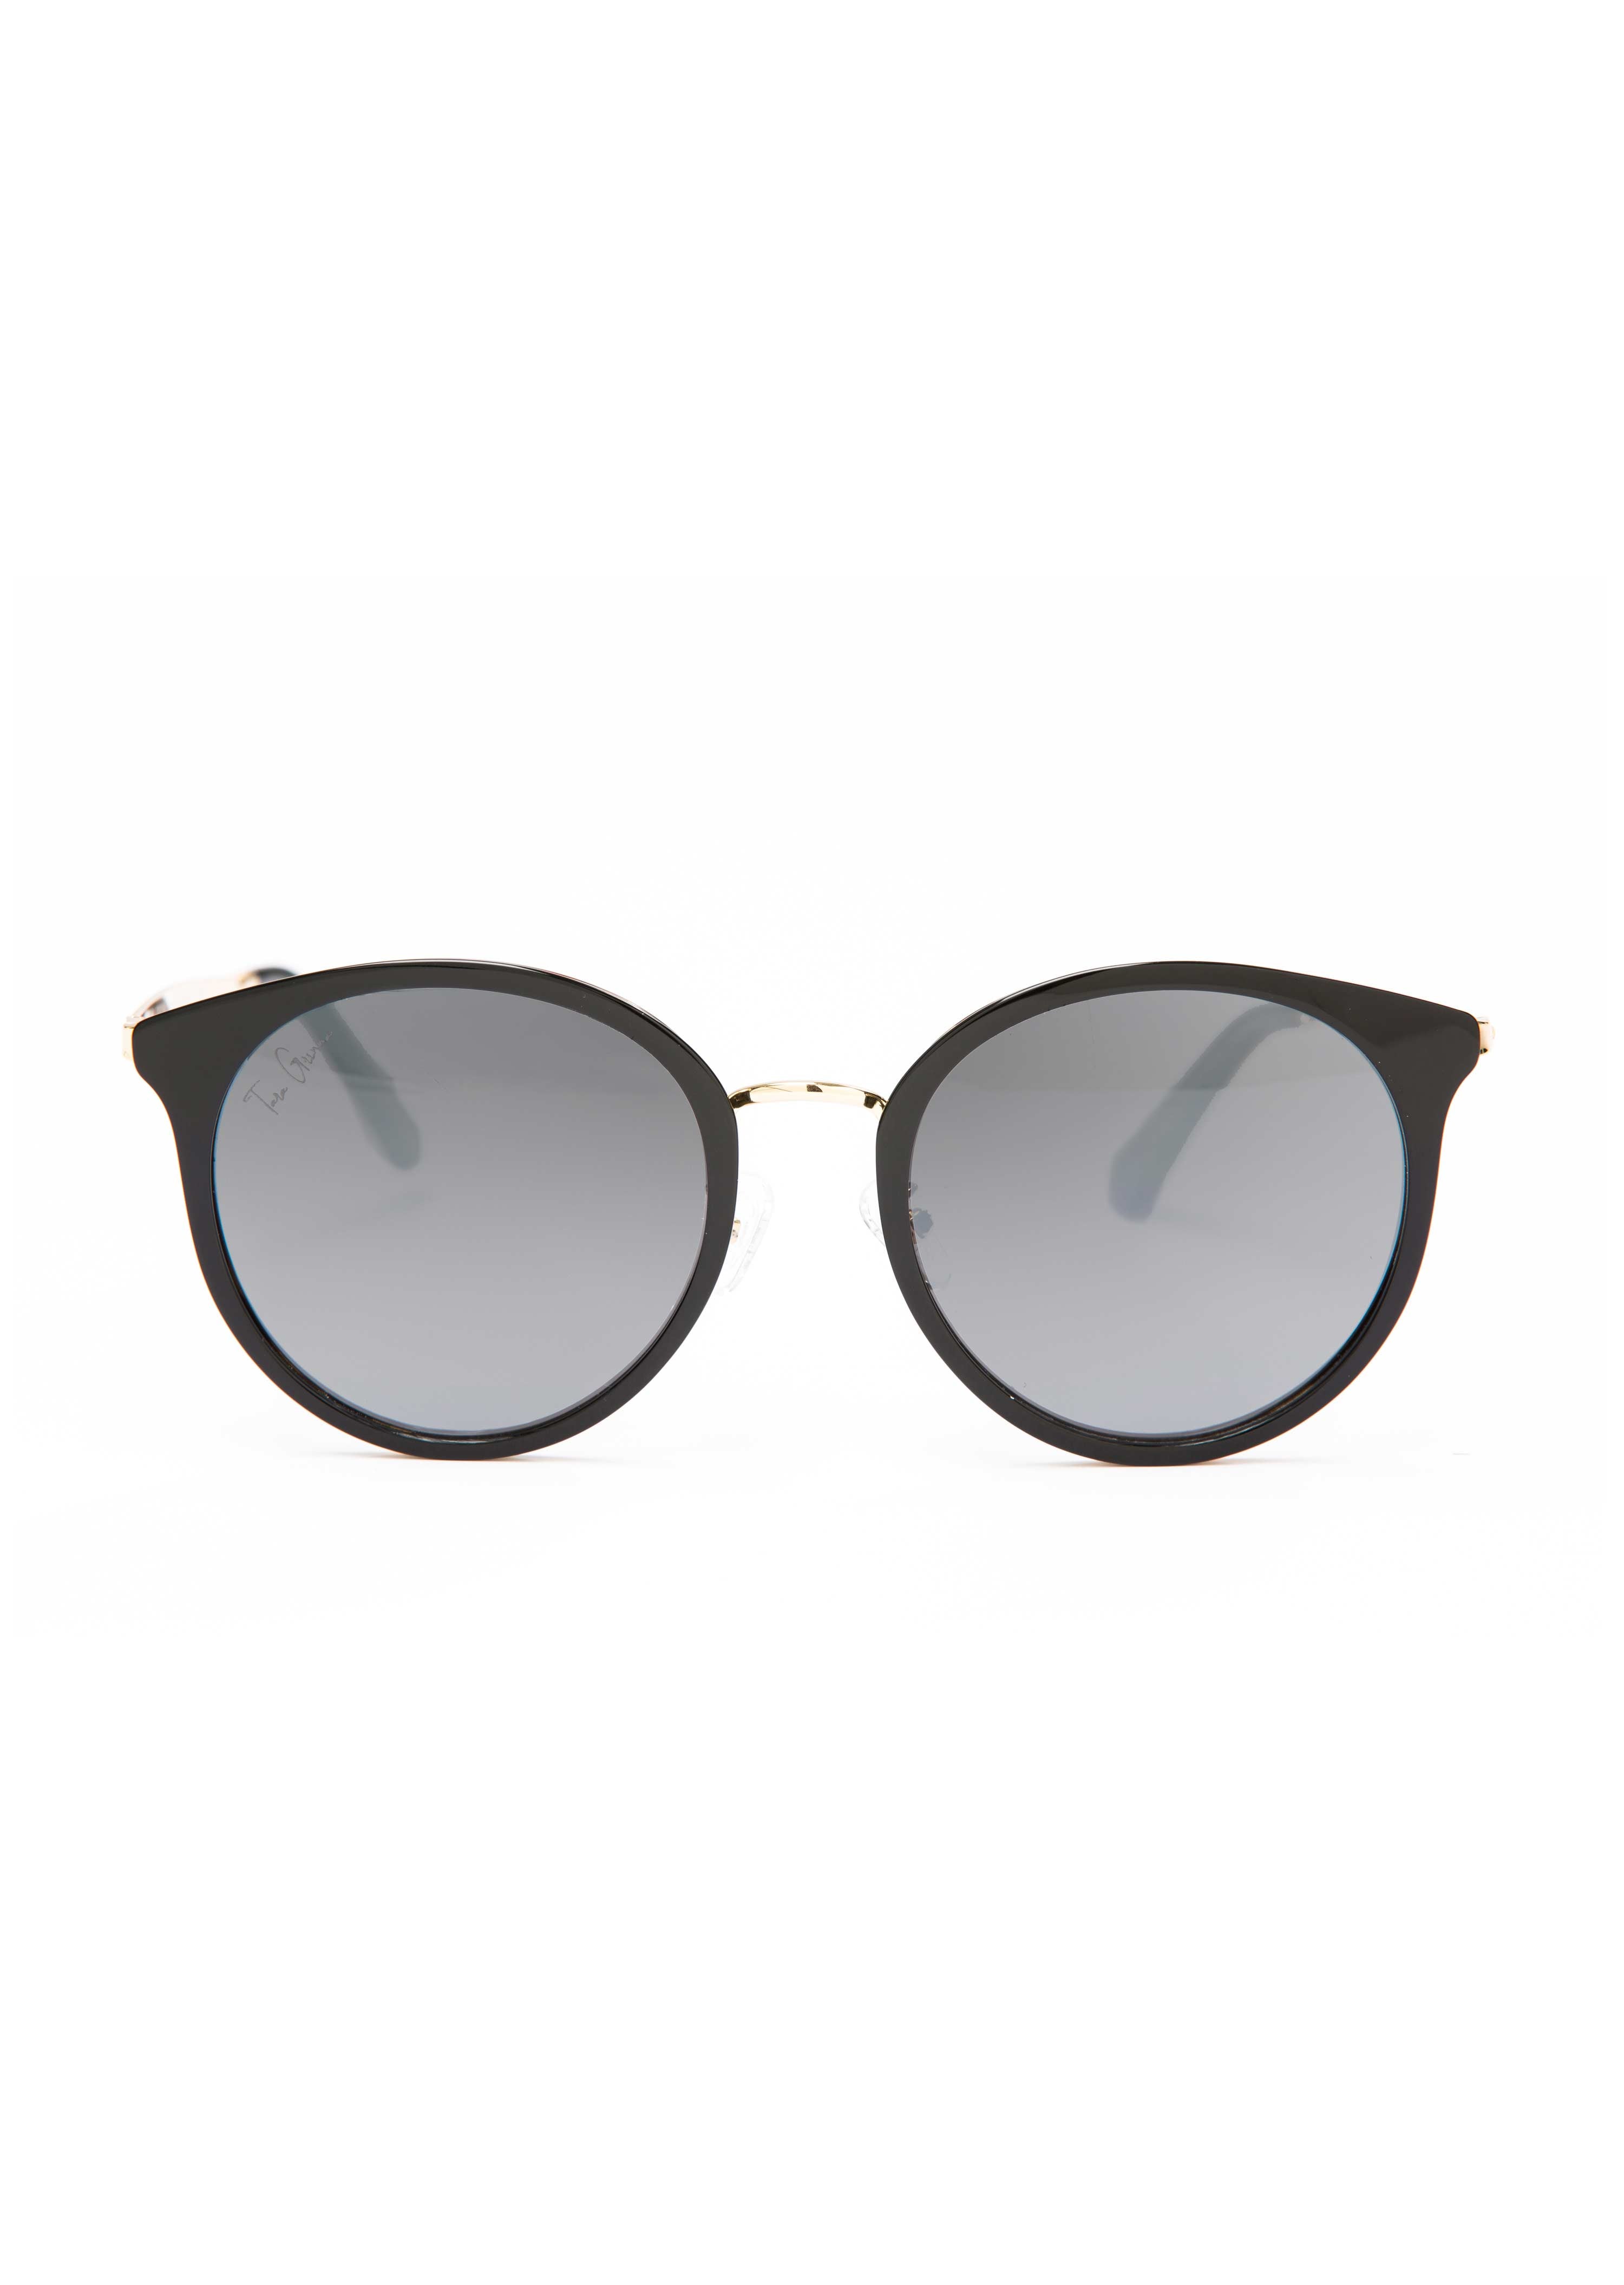 Modern Round Cateye Polarized Sunglasses (style M1808-C1)